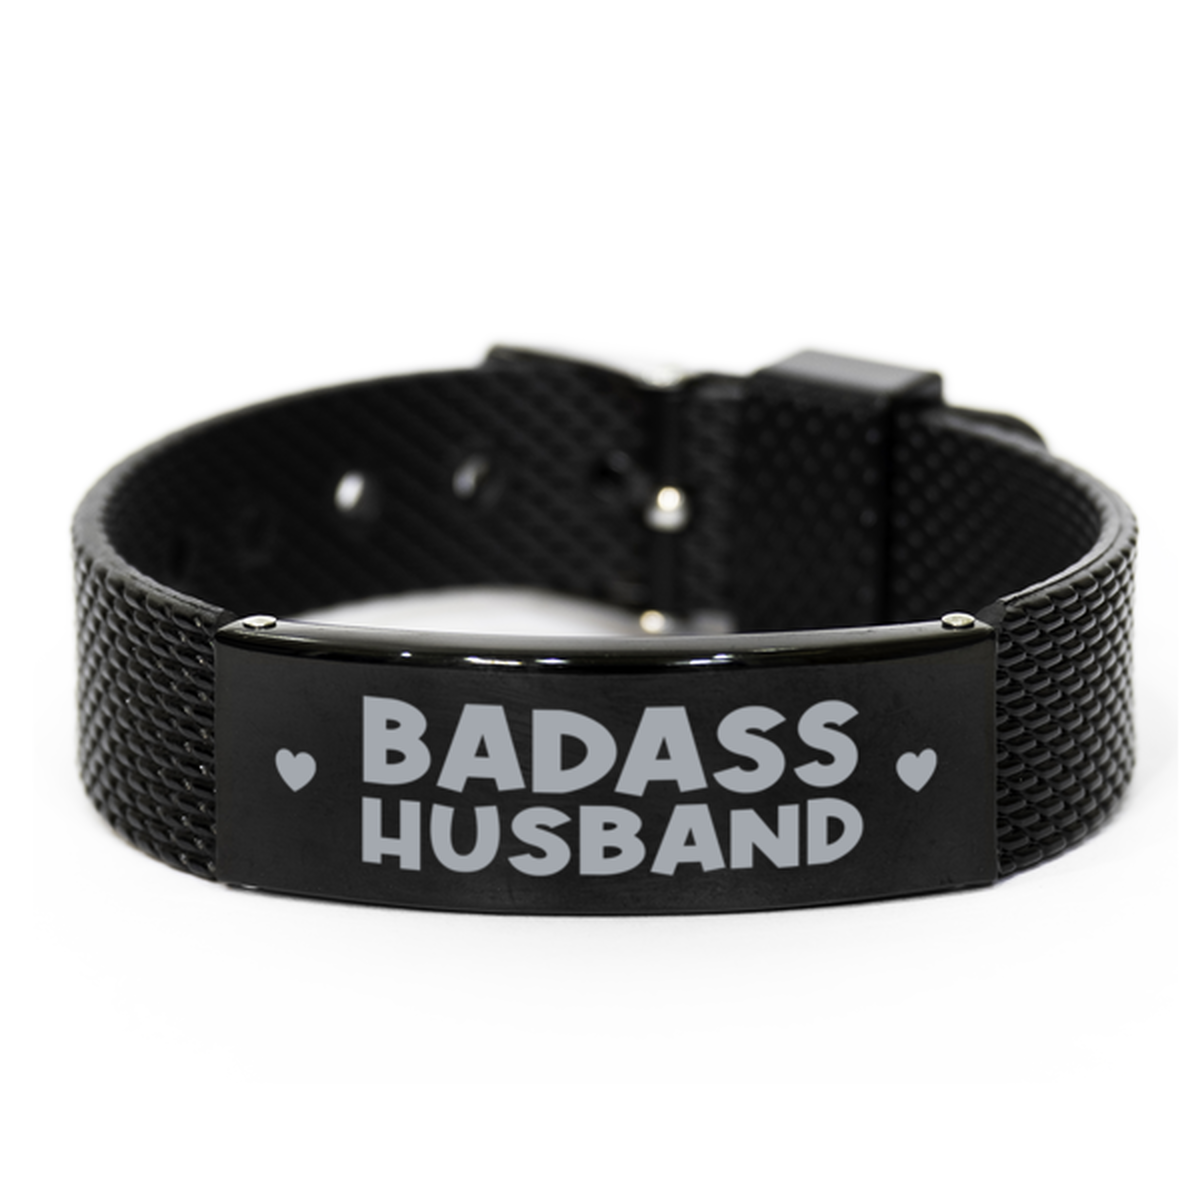 Husband Black Shark Mesh Bracelet, Badass Husband, Funny Family Gifts For Husband From Wife